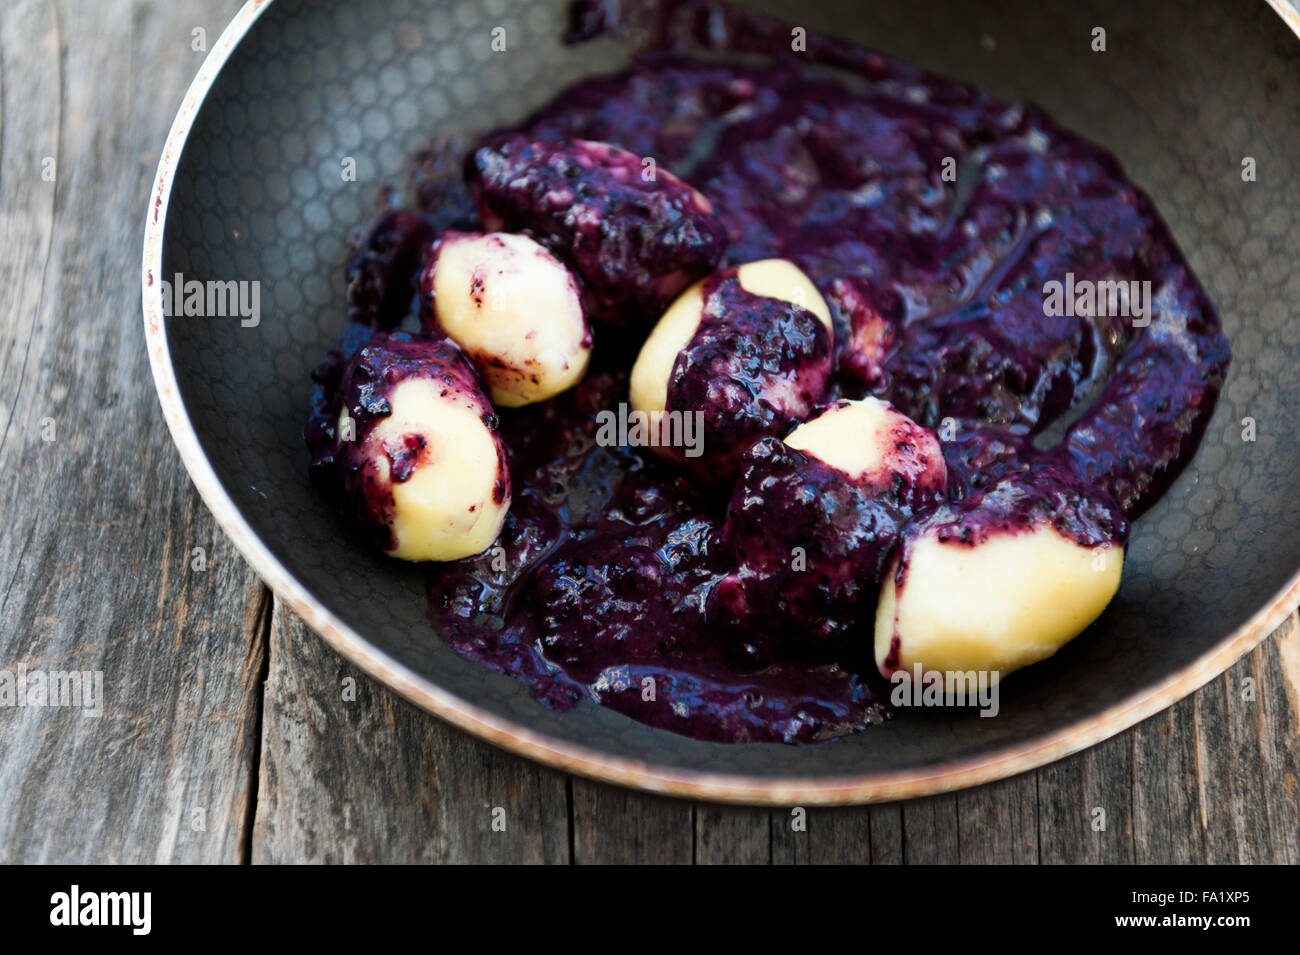 https://c8.alamy.com/comp/FA1XP5/cheese-gnocchi-with-blueberry-sauce-FA1XP5.jpg